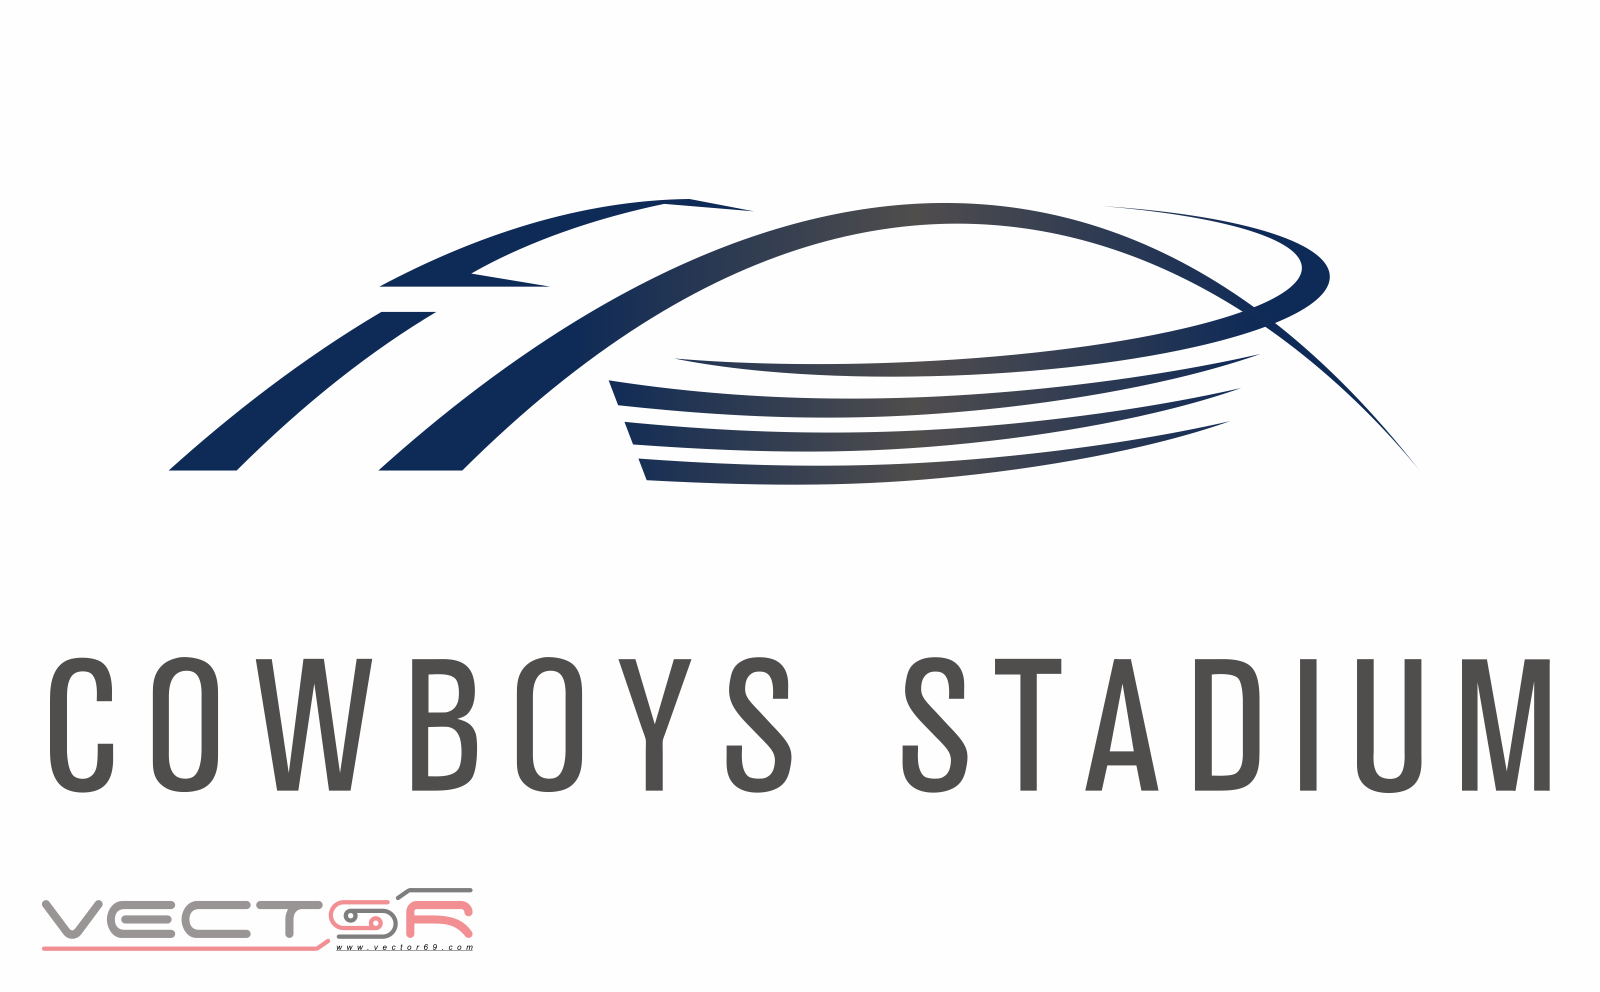 Cowboys Stadium 2009-2013 Logo - Download Transparent Images, Portable Network Graphics (.PNG)